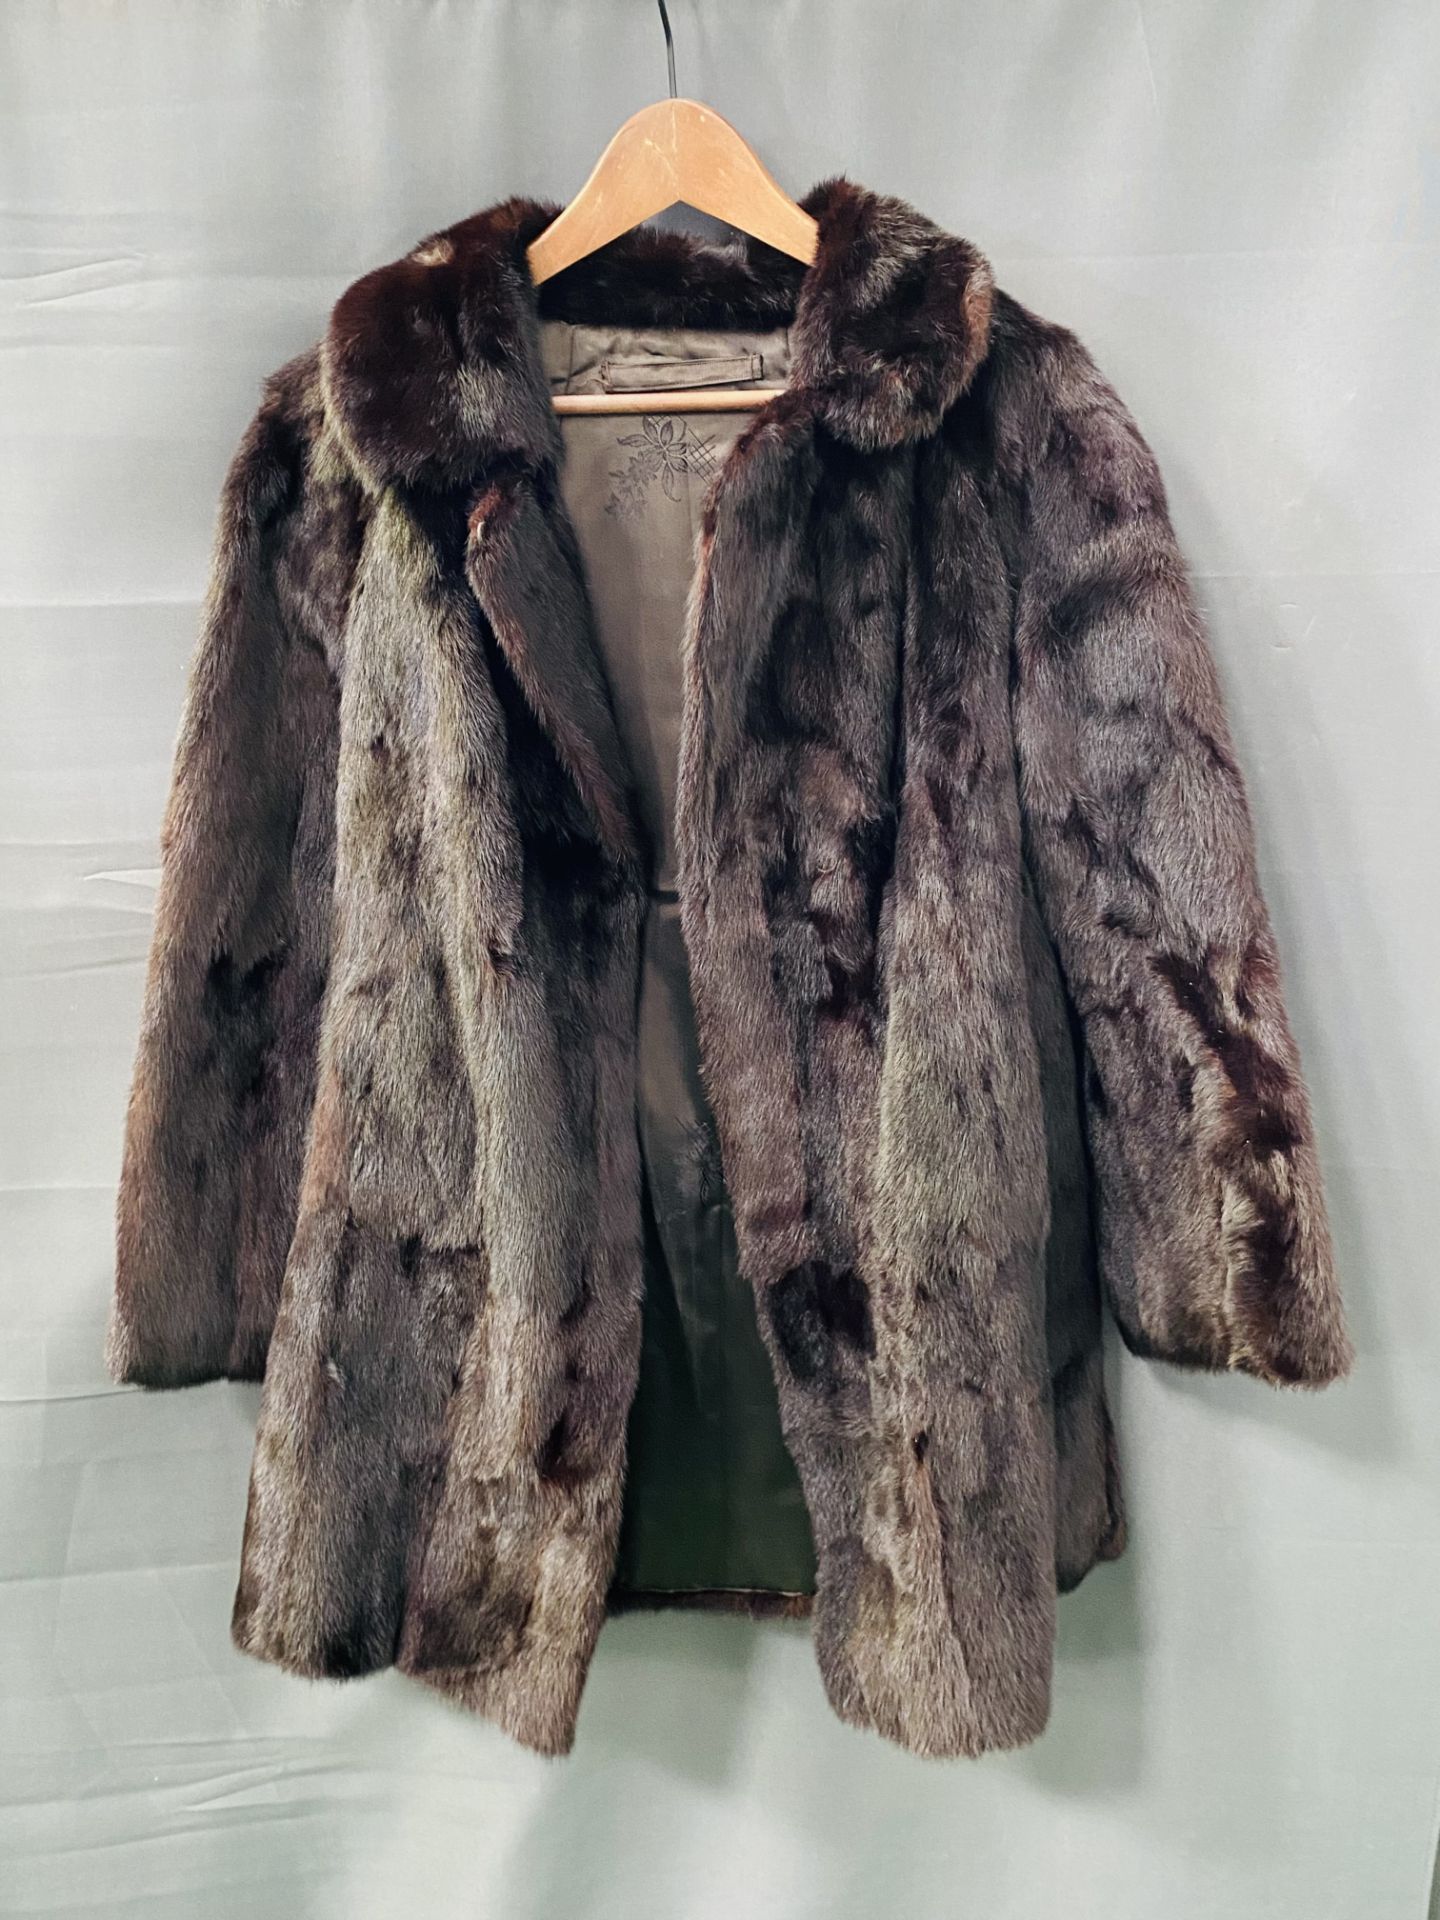 Ladies mink coat together with a fur stole - Bild 4 aus 5